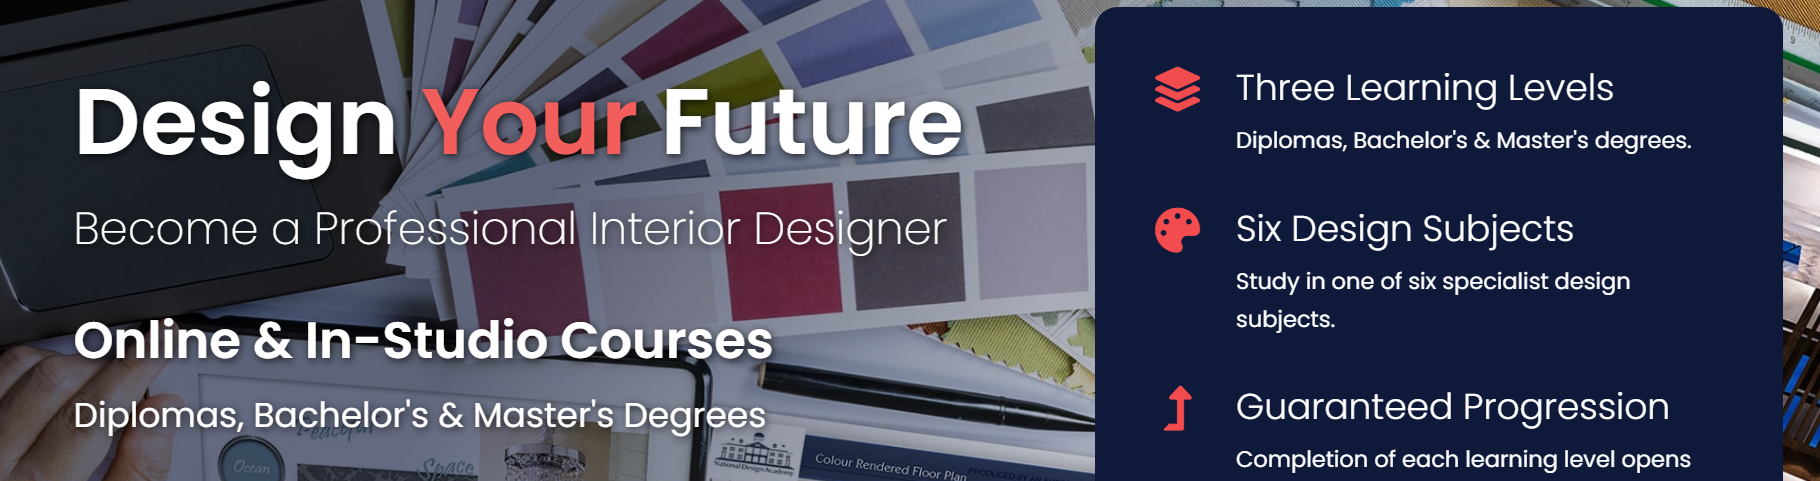 National Design Academy Design Your Future